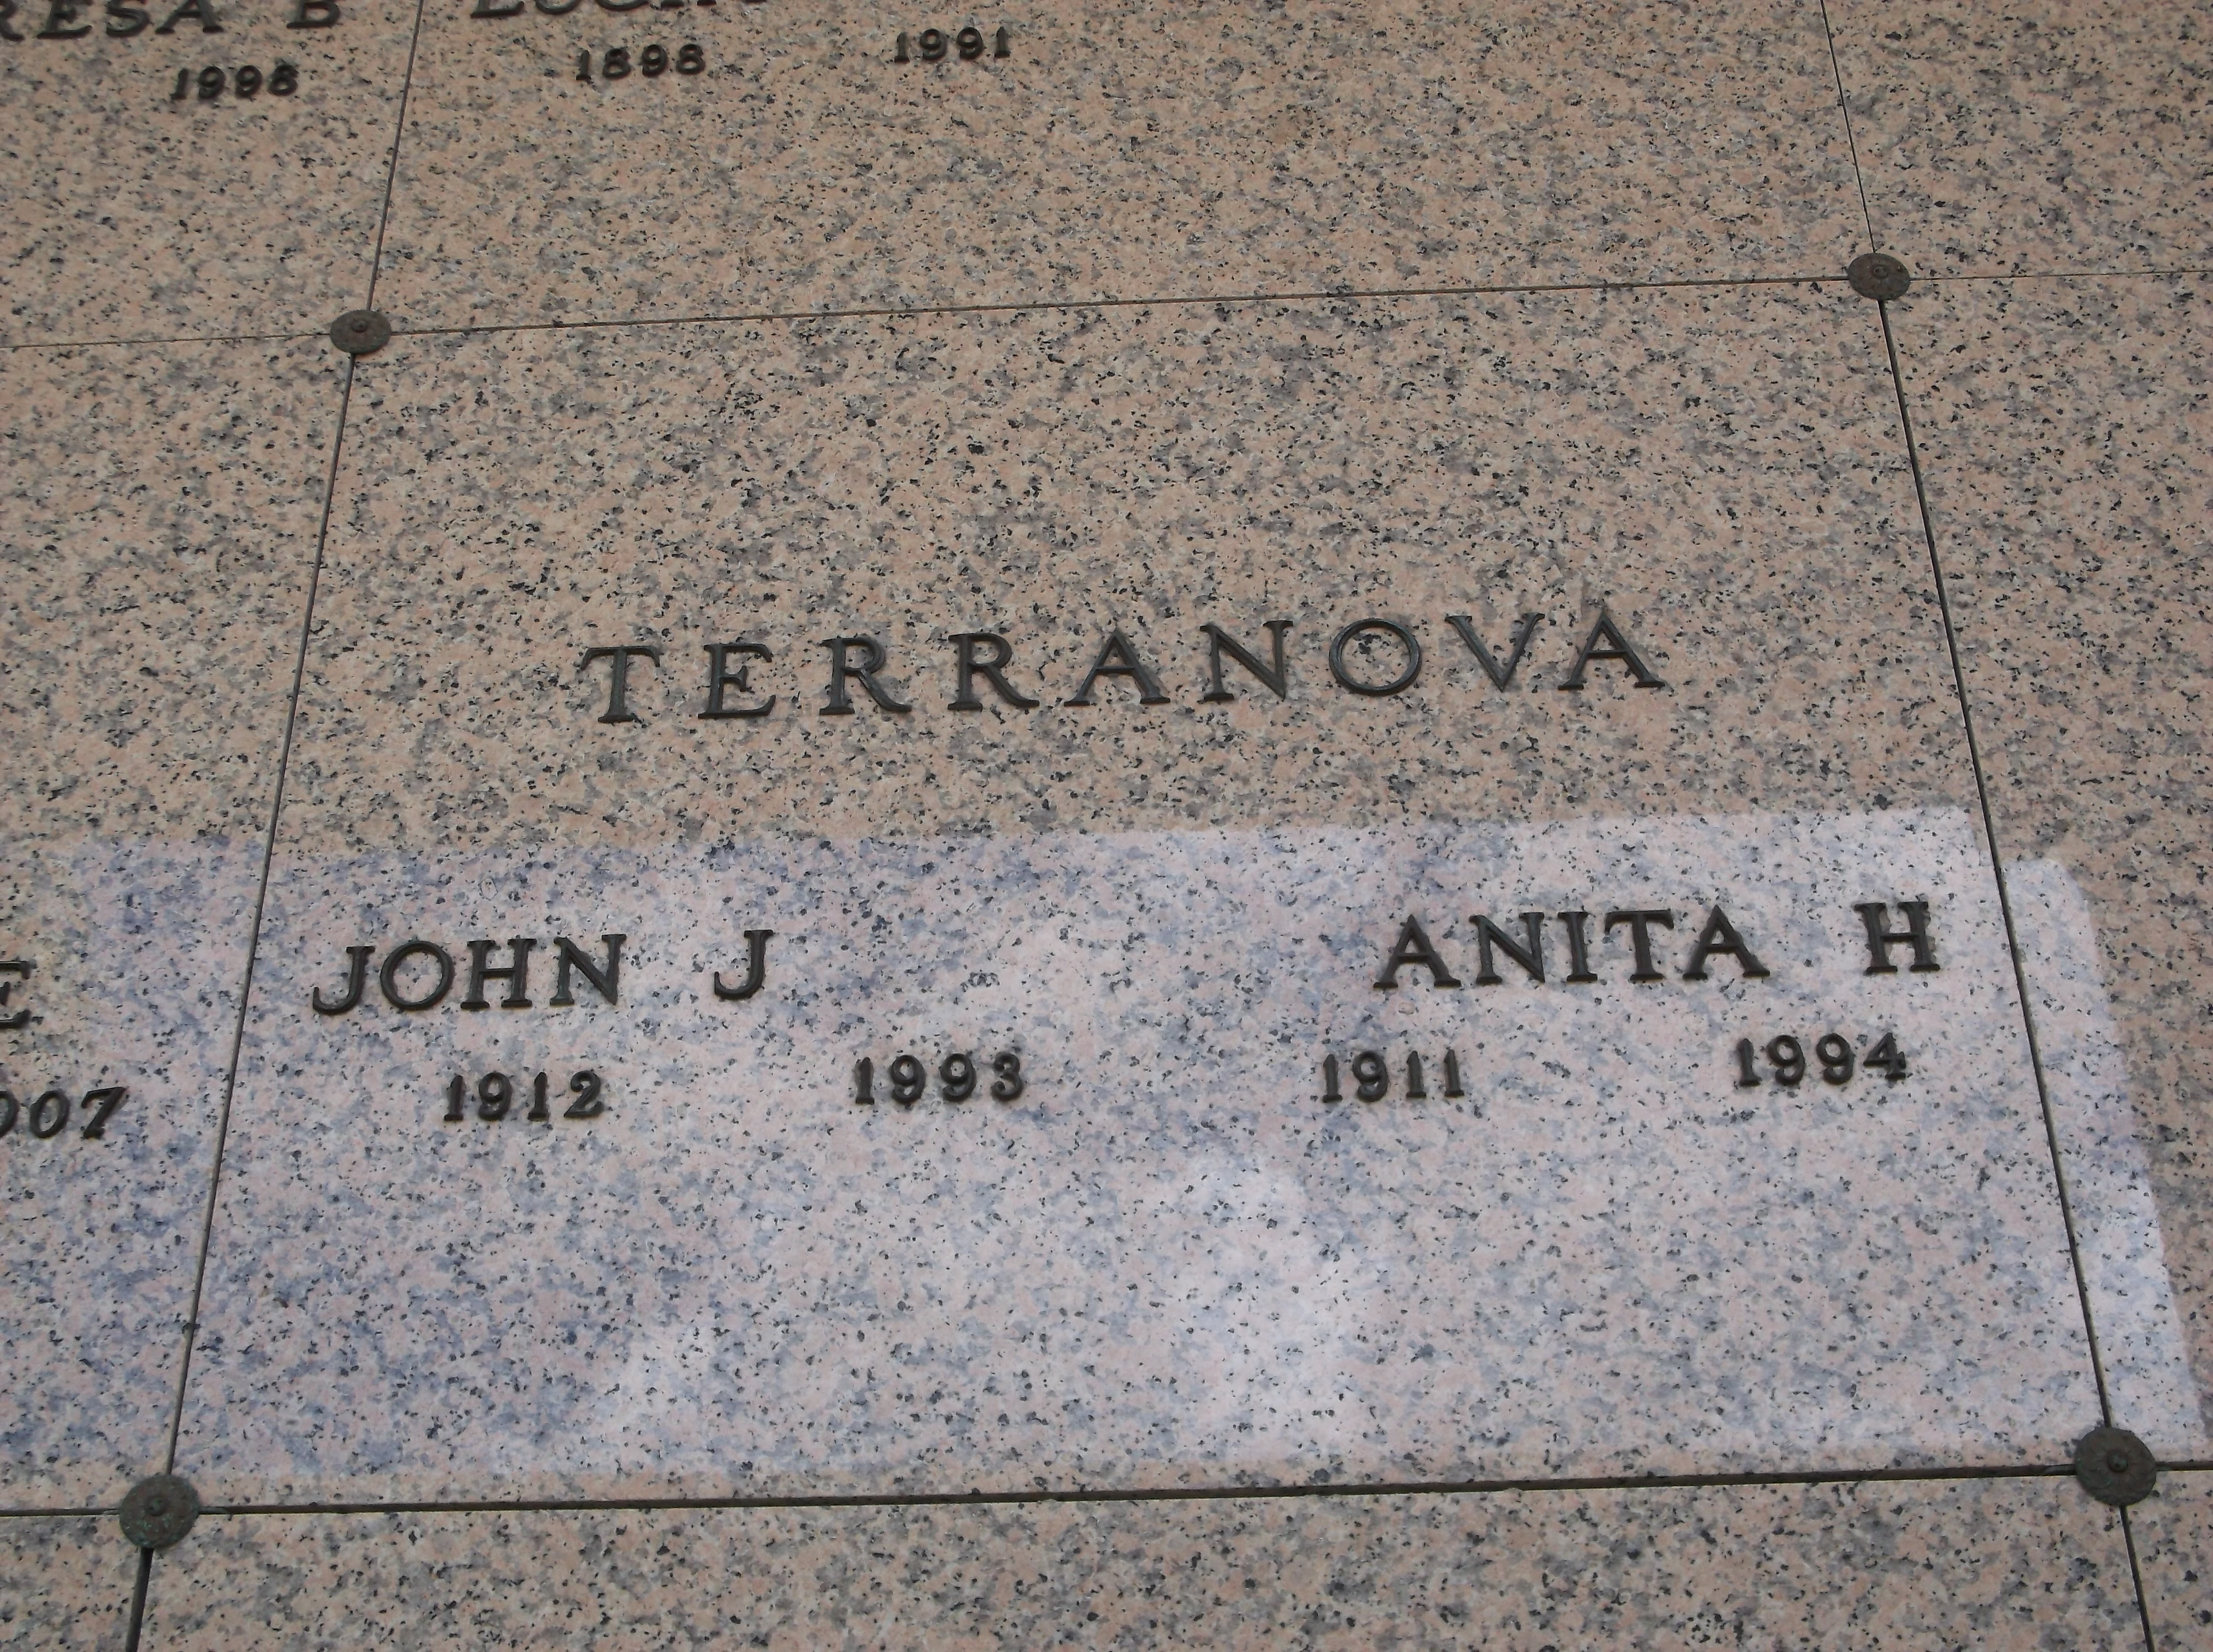 Anita H Terranova